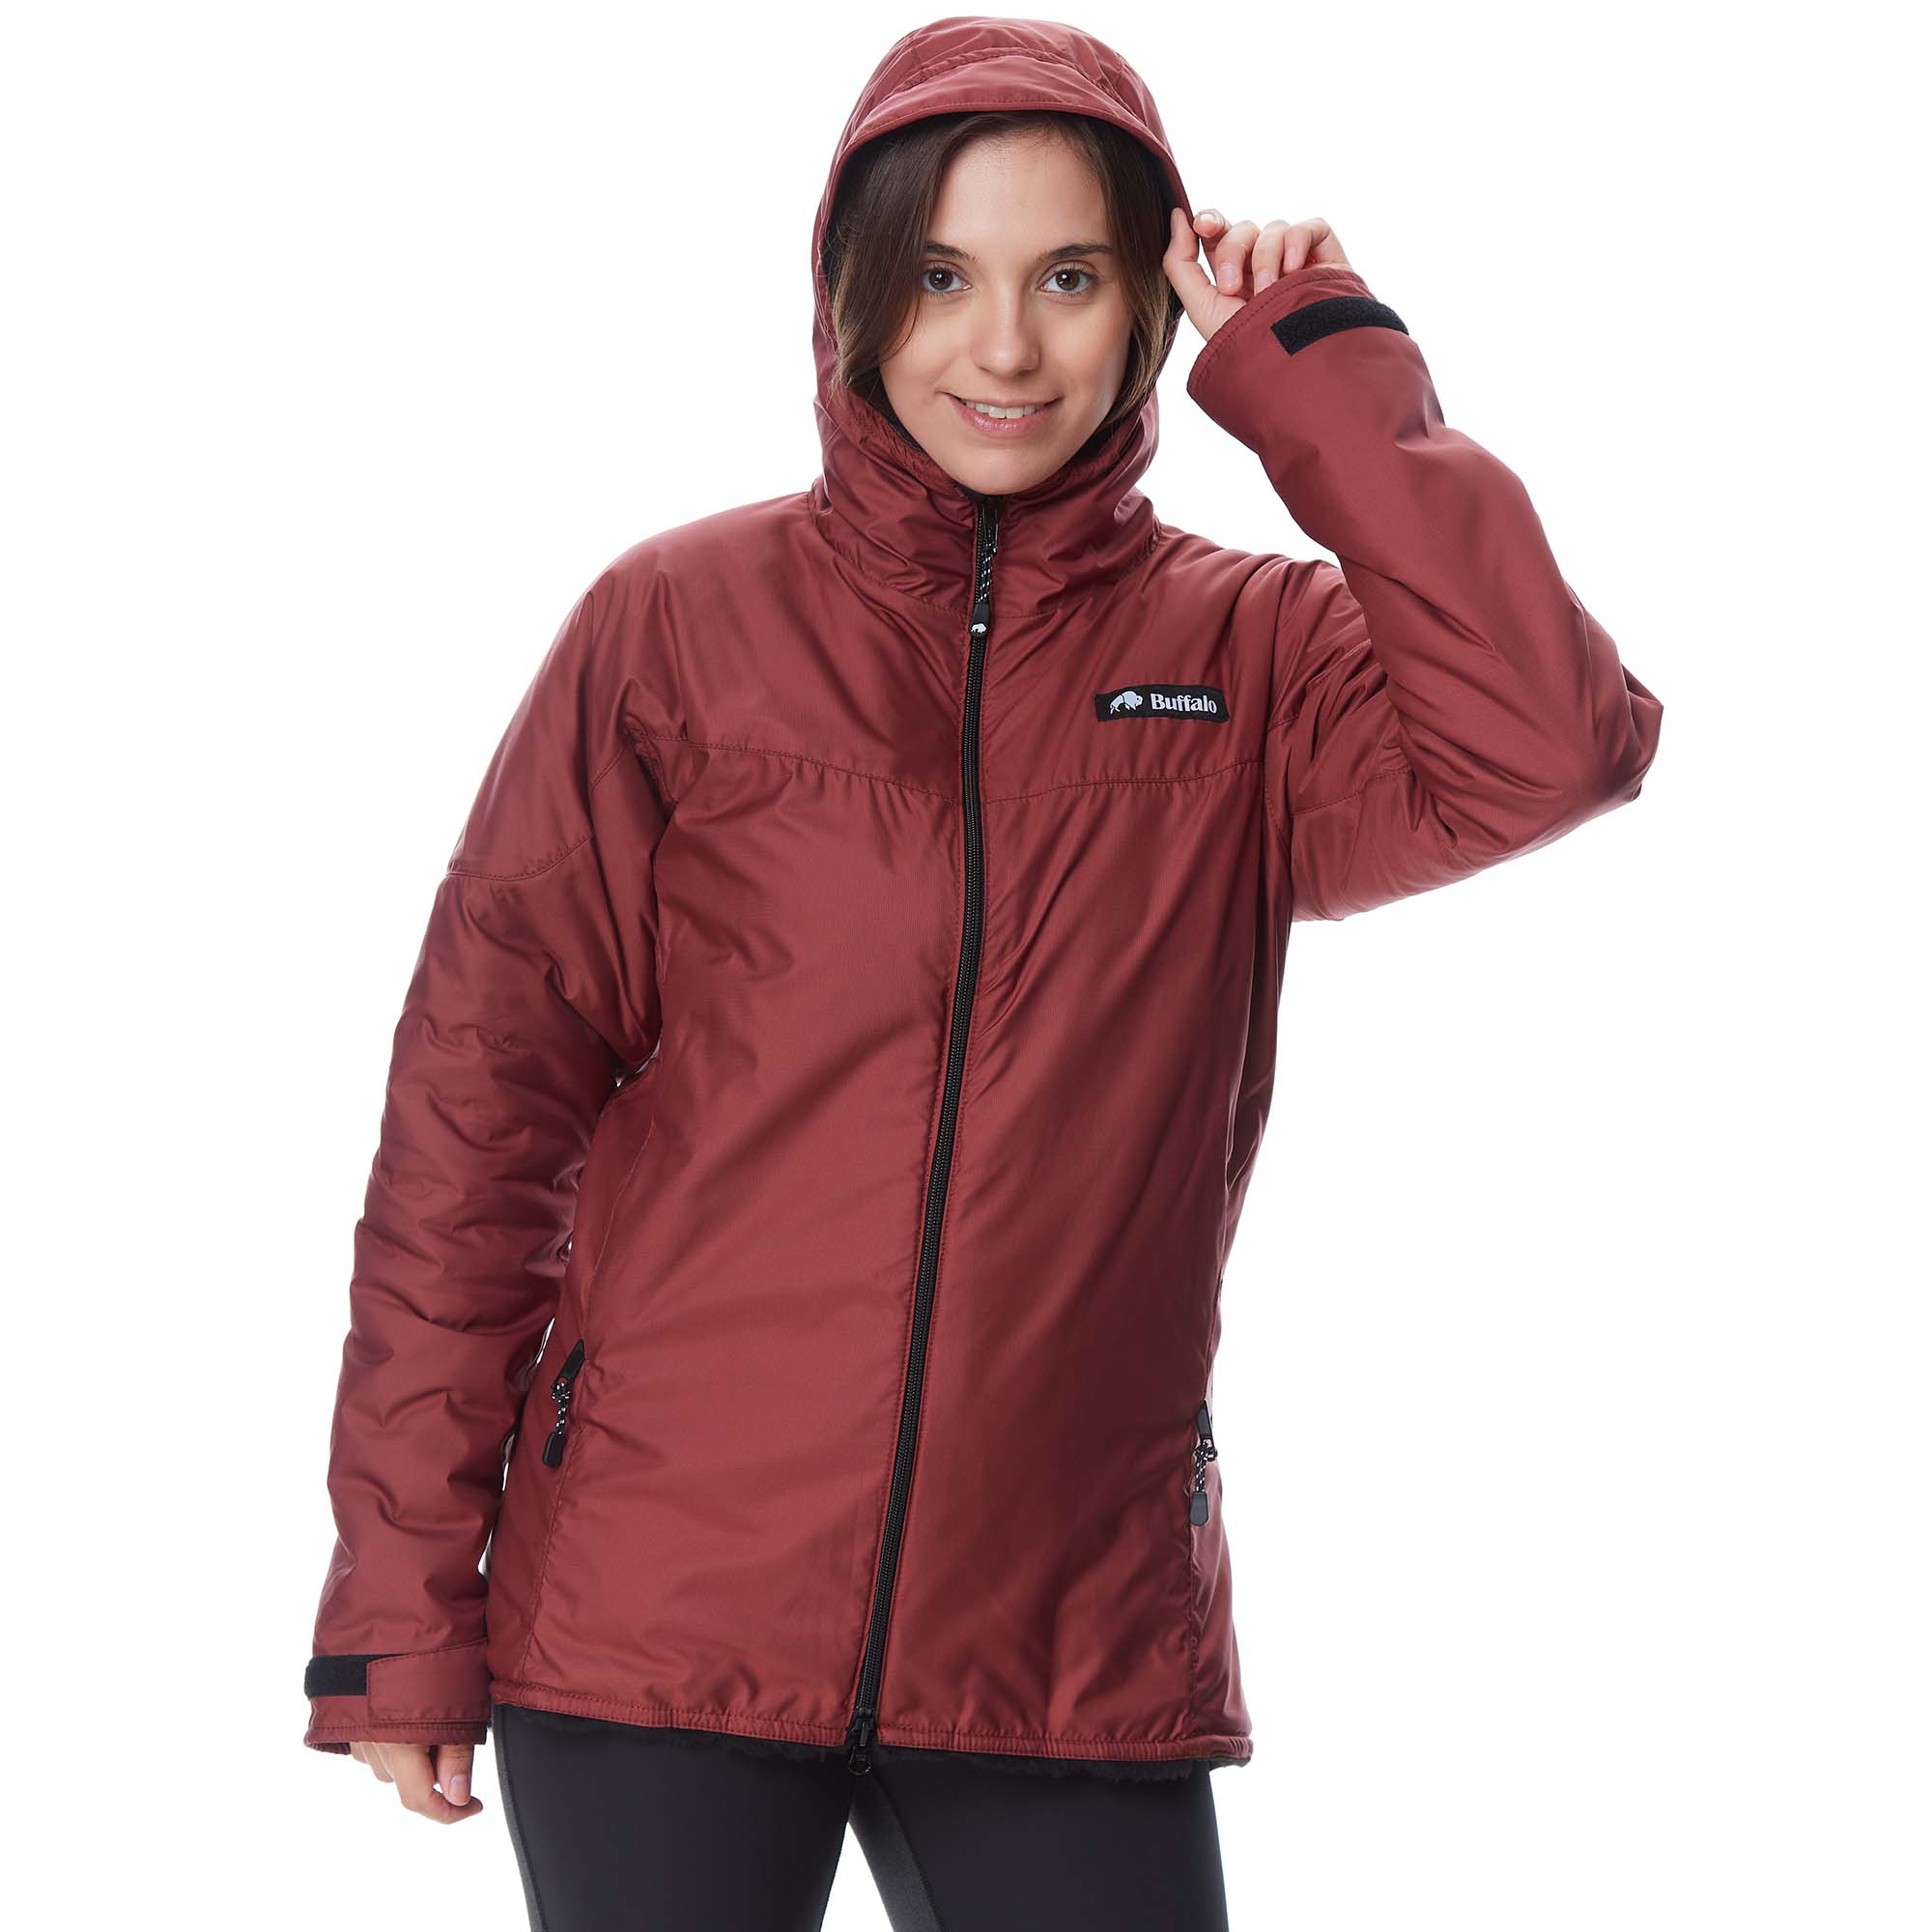 Buffalo Women's Alpine Technical All Weather Jacket